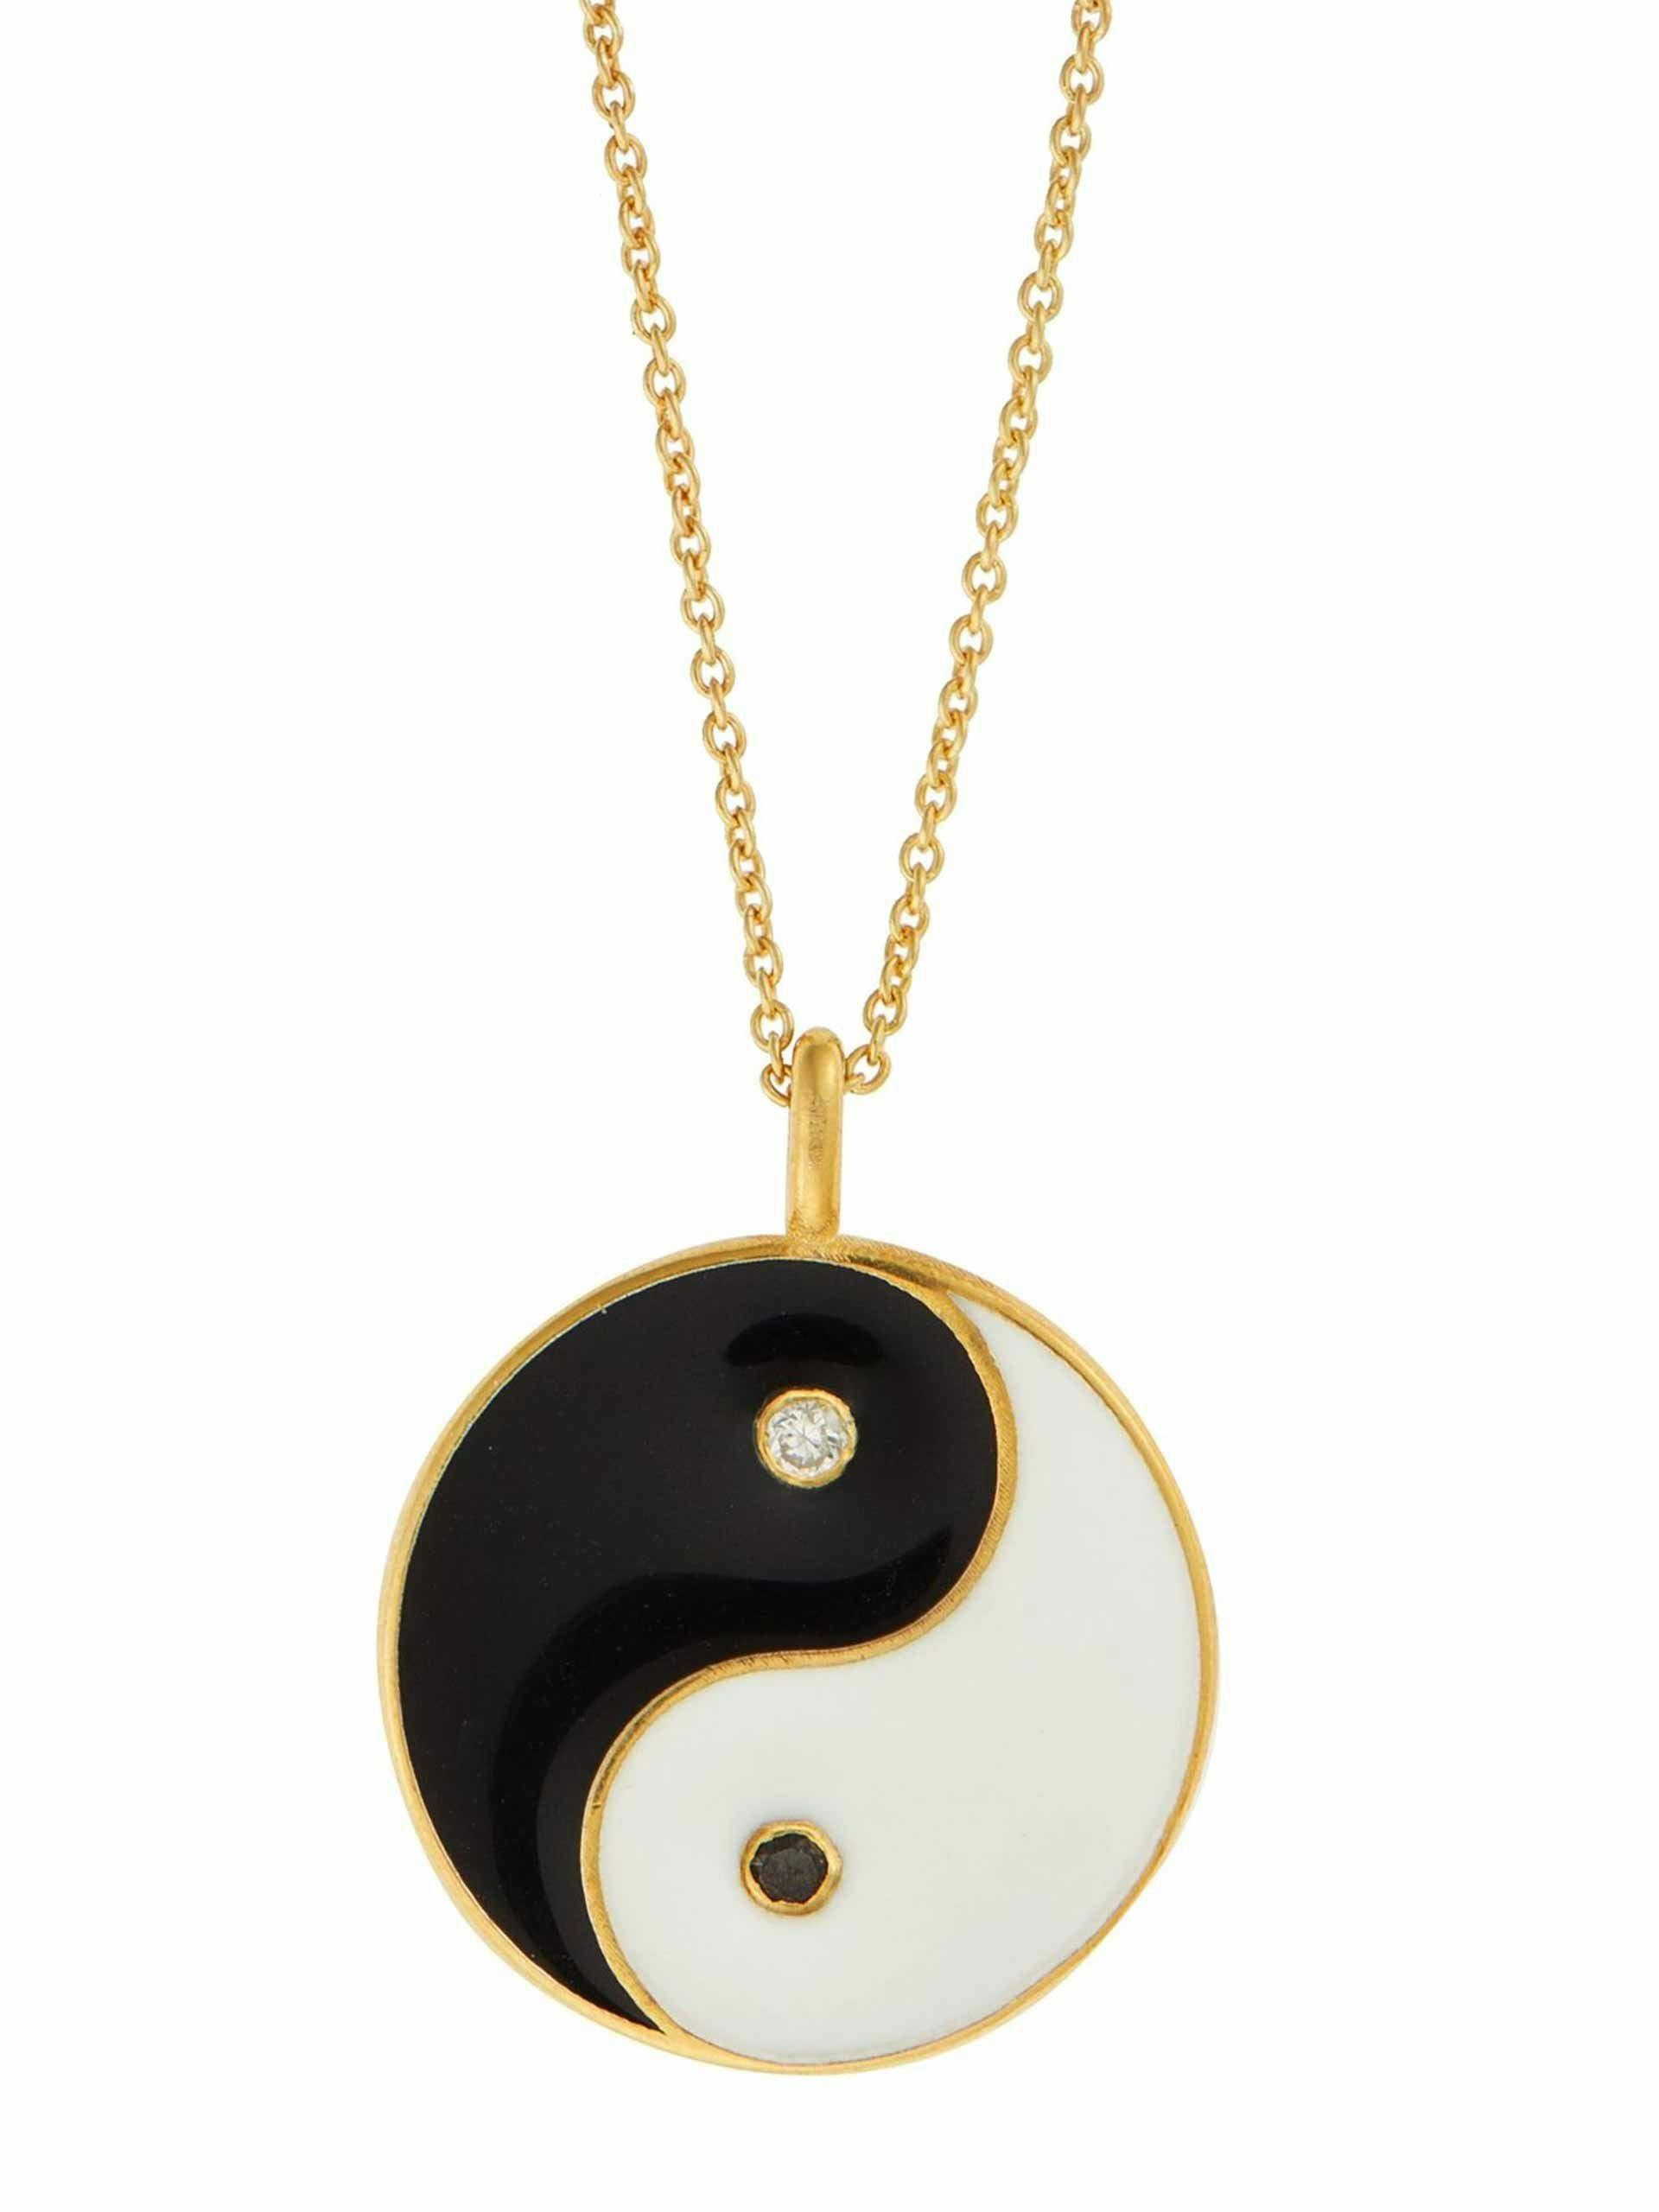 Yin-Yang pendant necklace